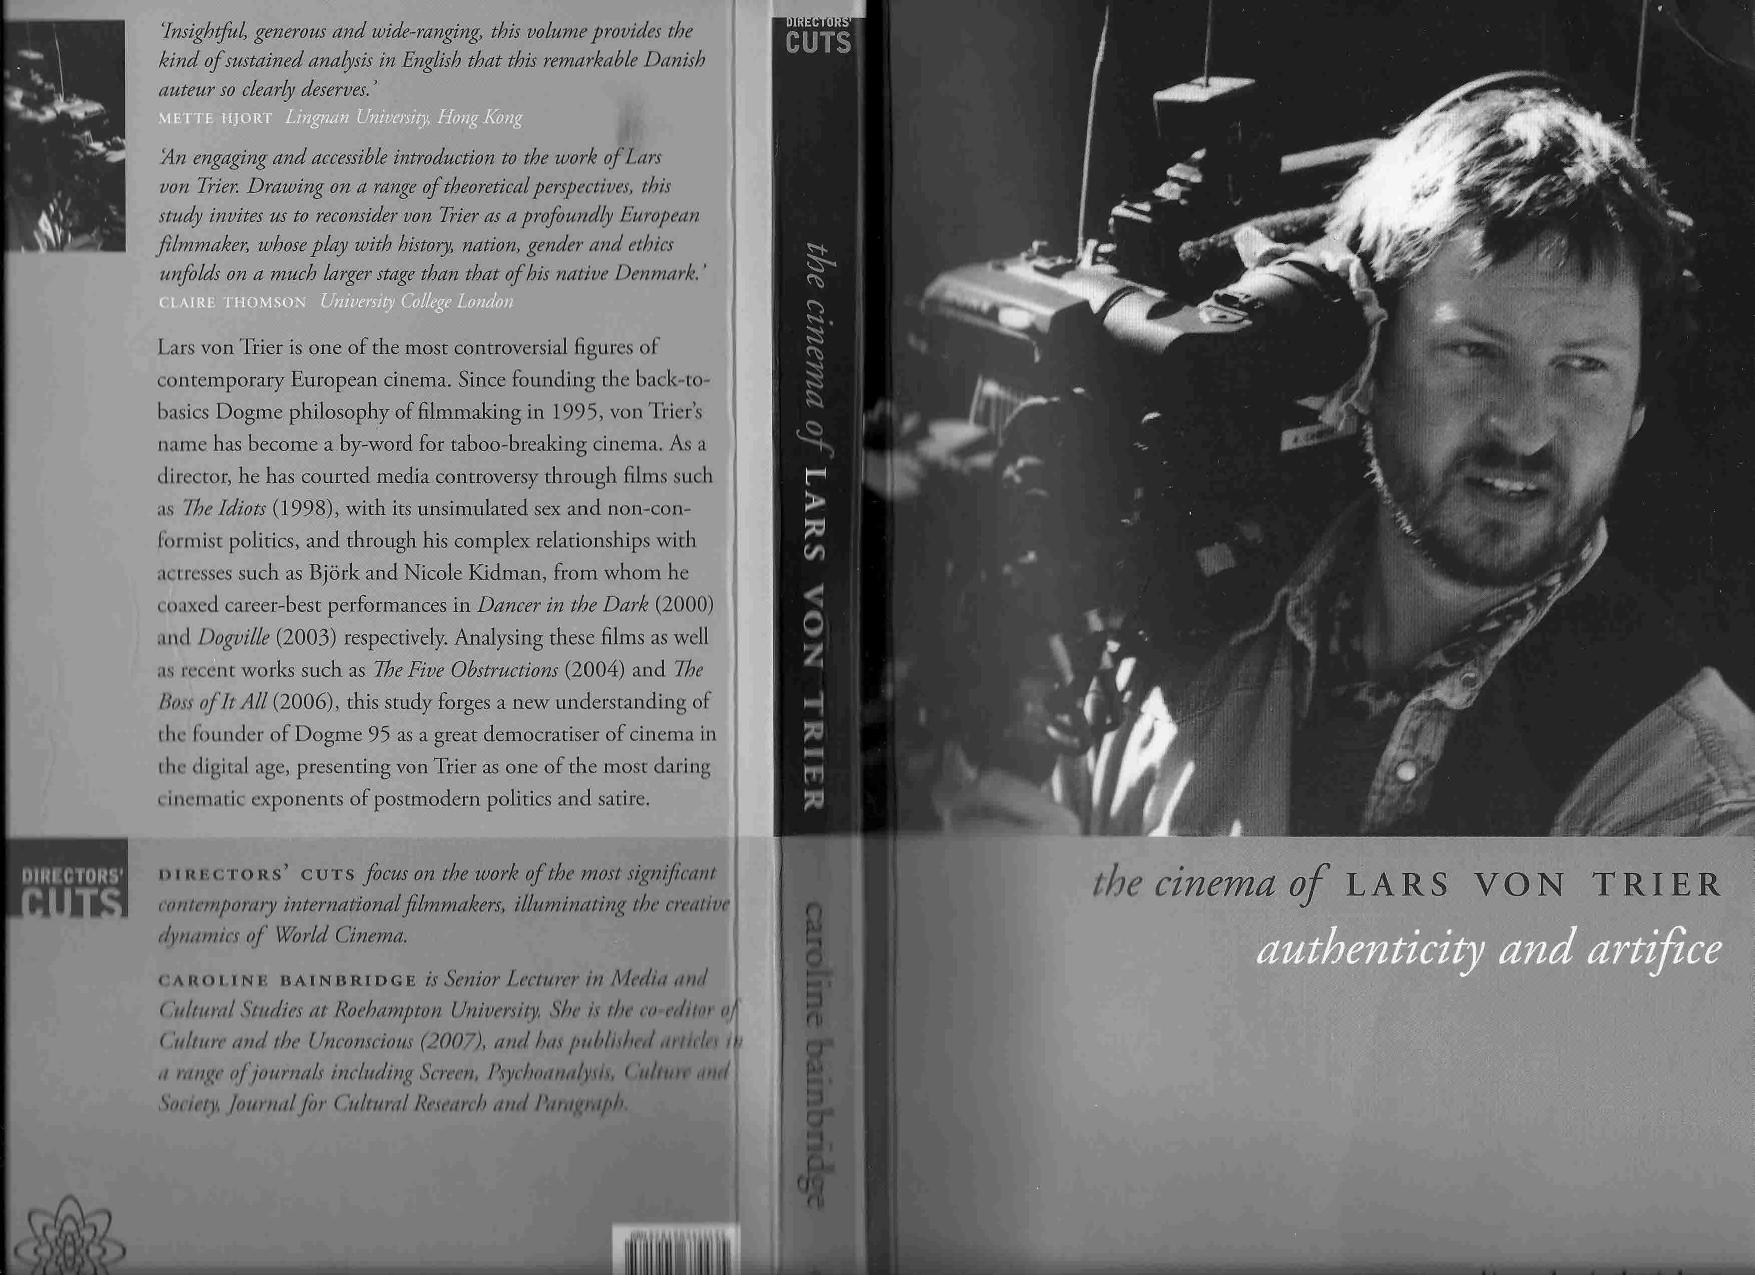 The Cinema of Lars Von Trier (Authenticity and Artifice) by Caroline Bainbridge